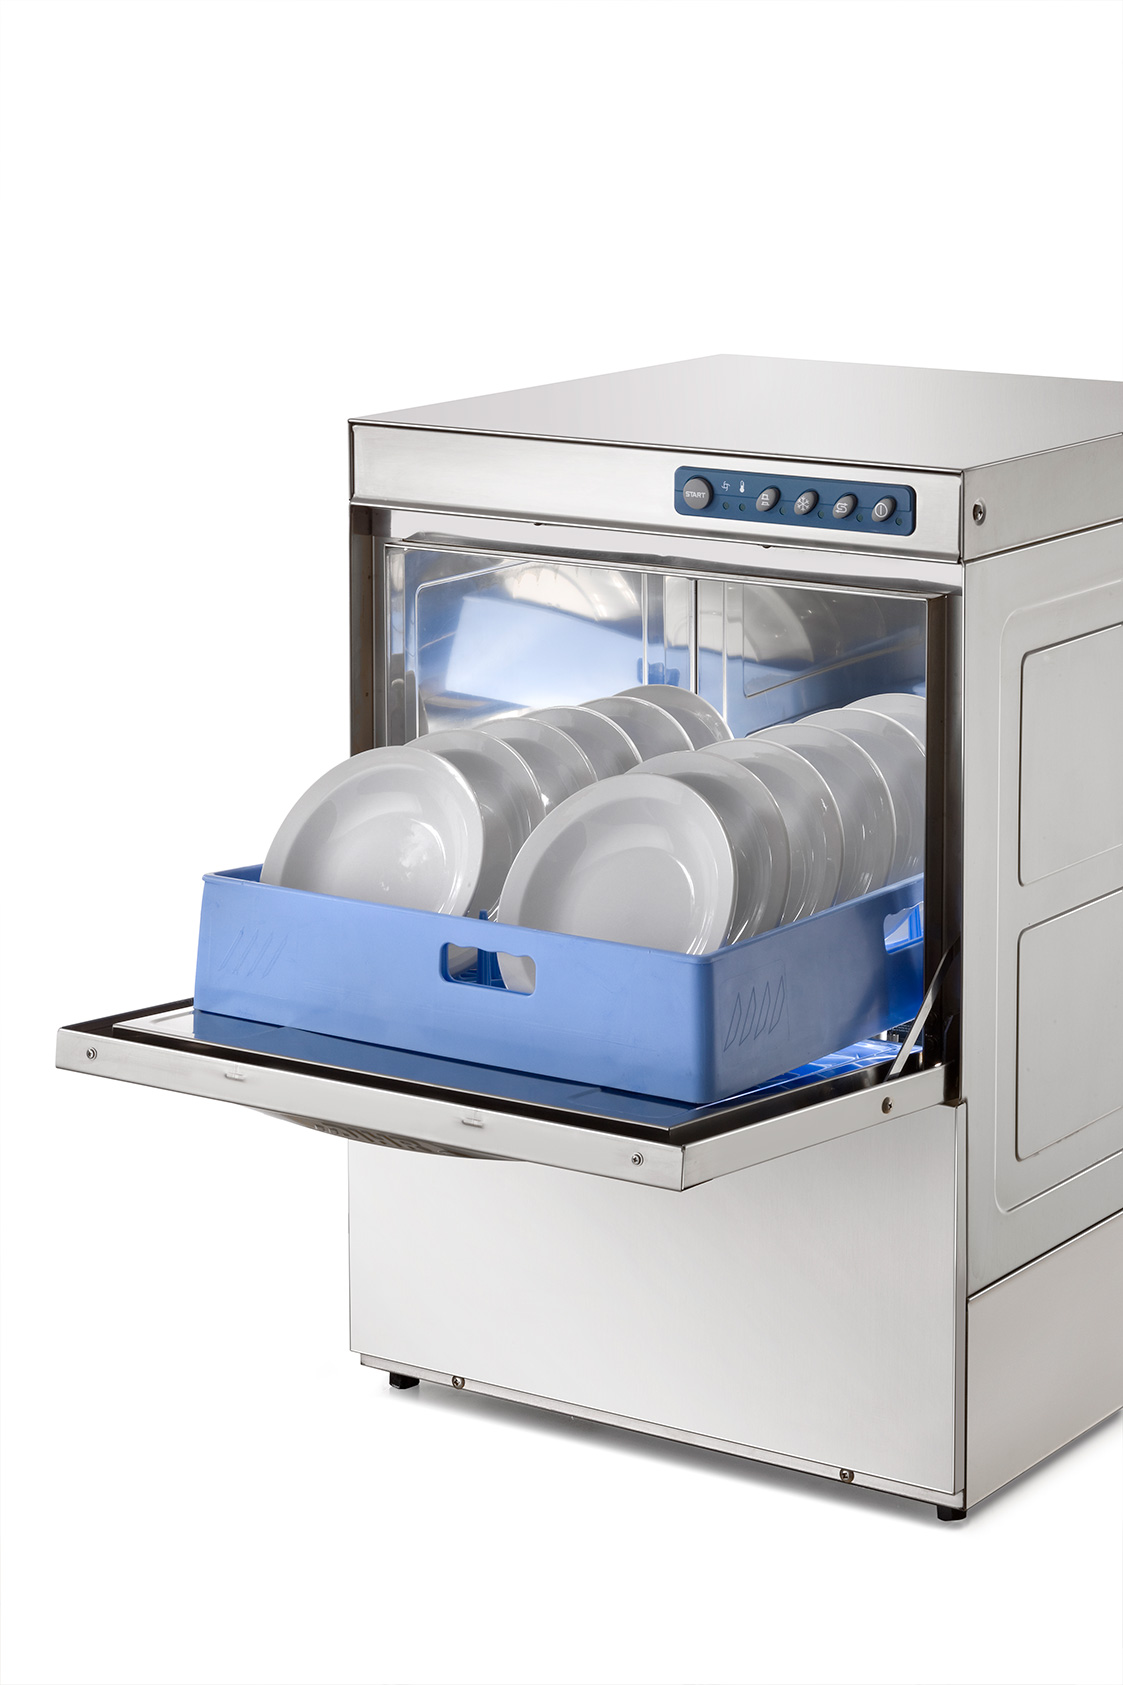 Посудомоечная машина Dihr GS 50